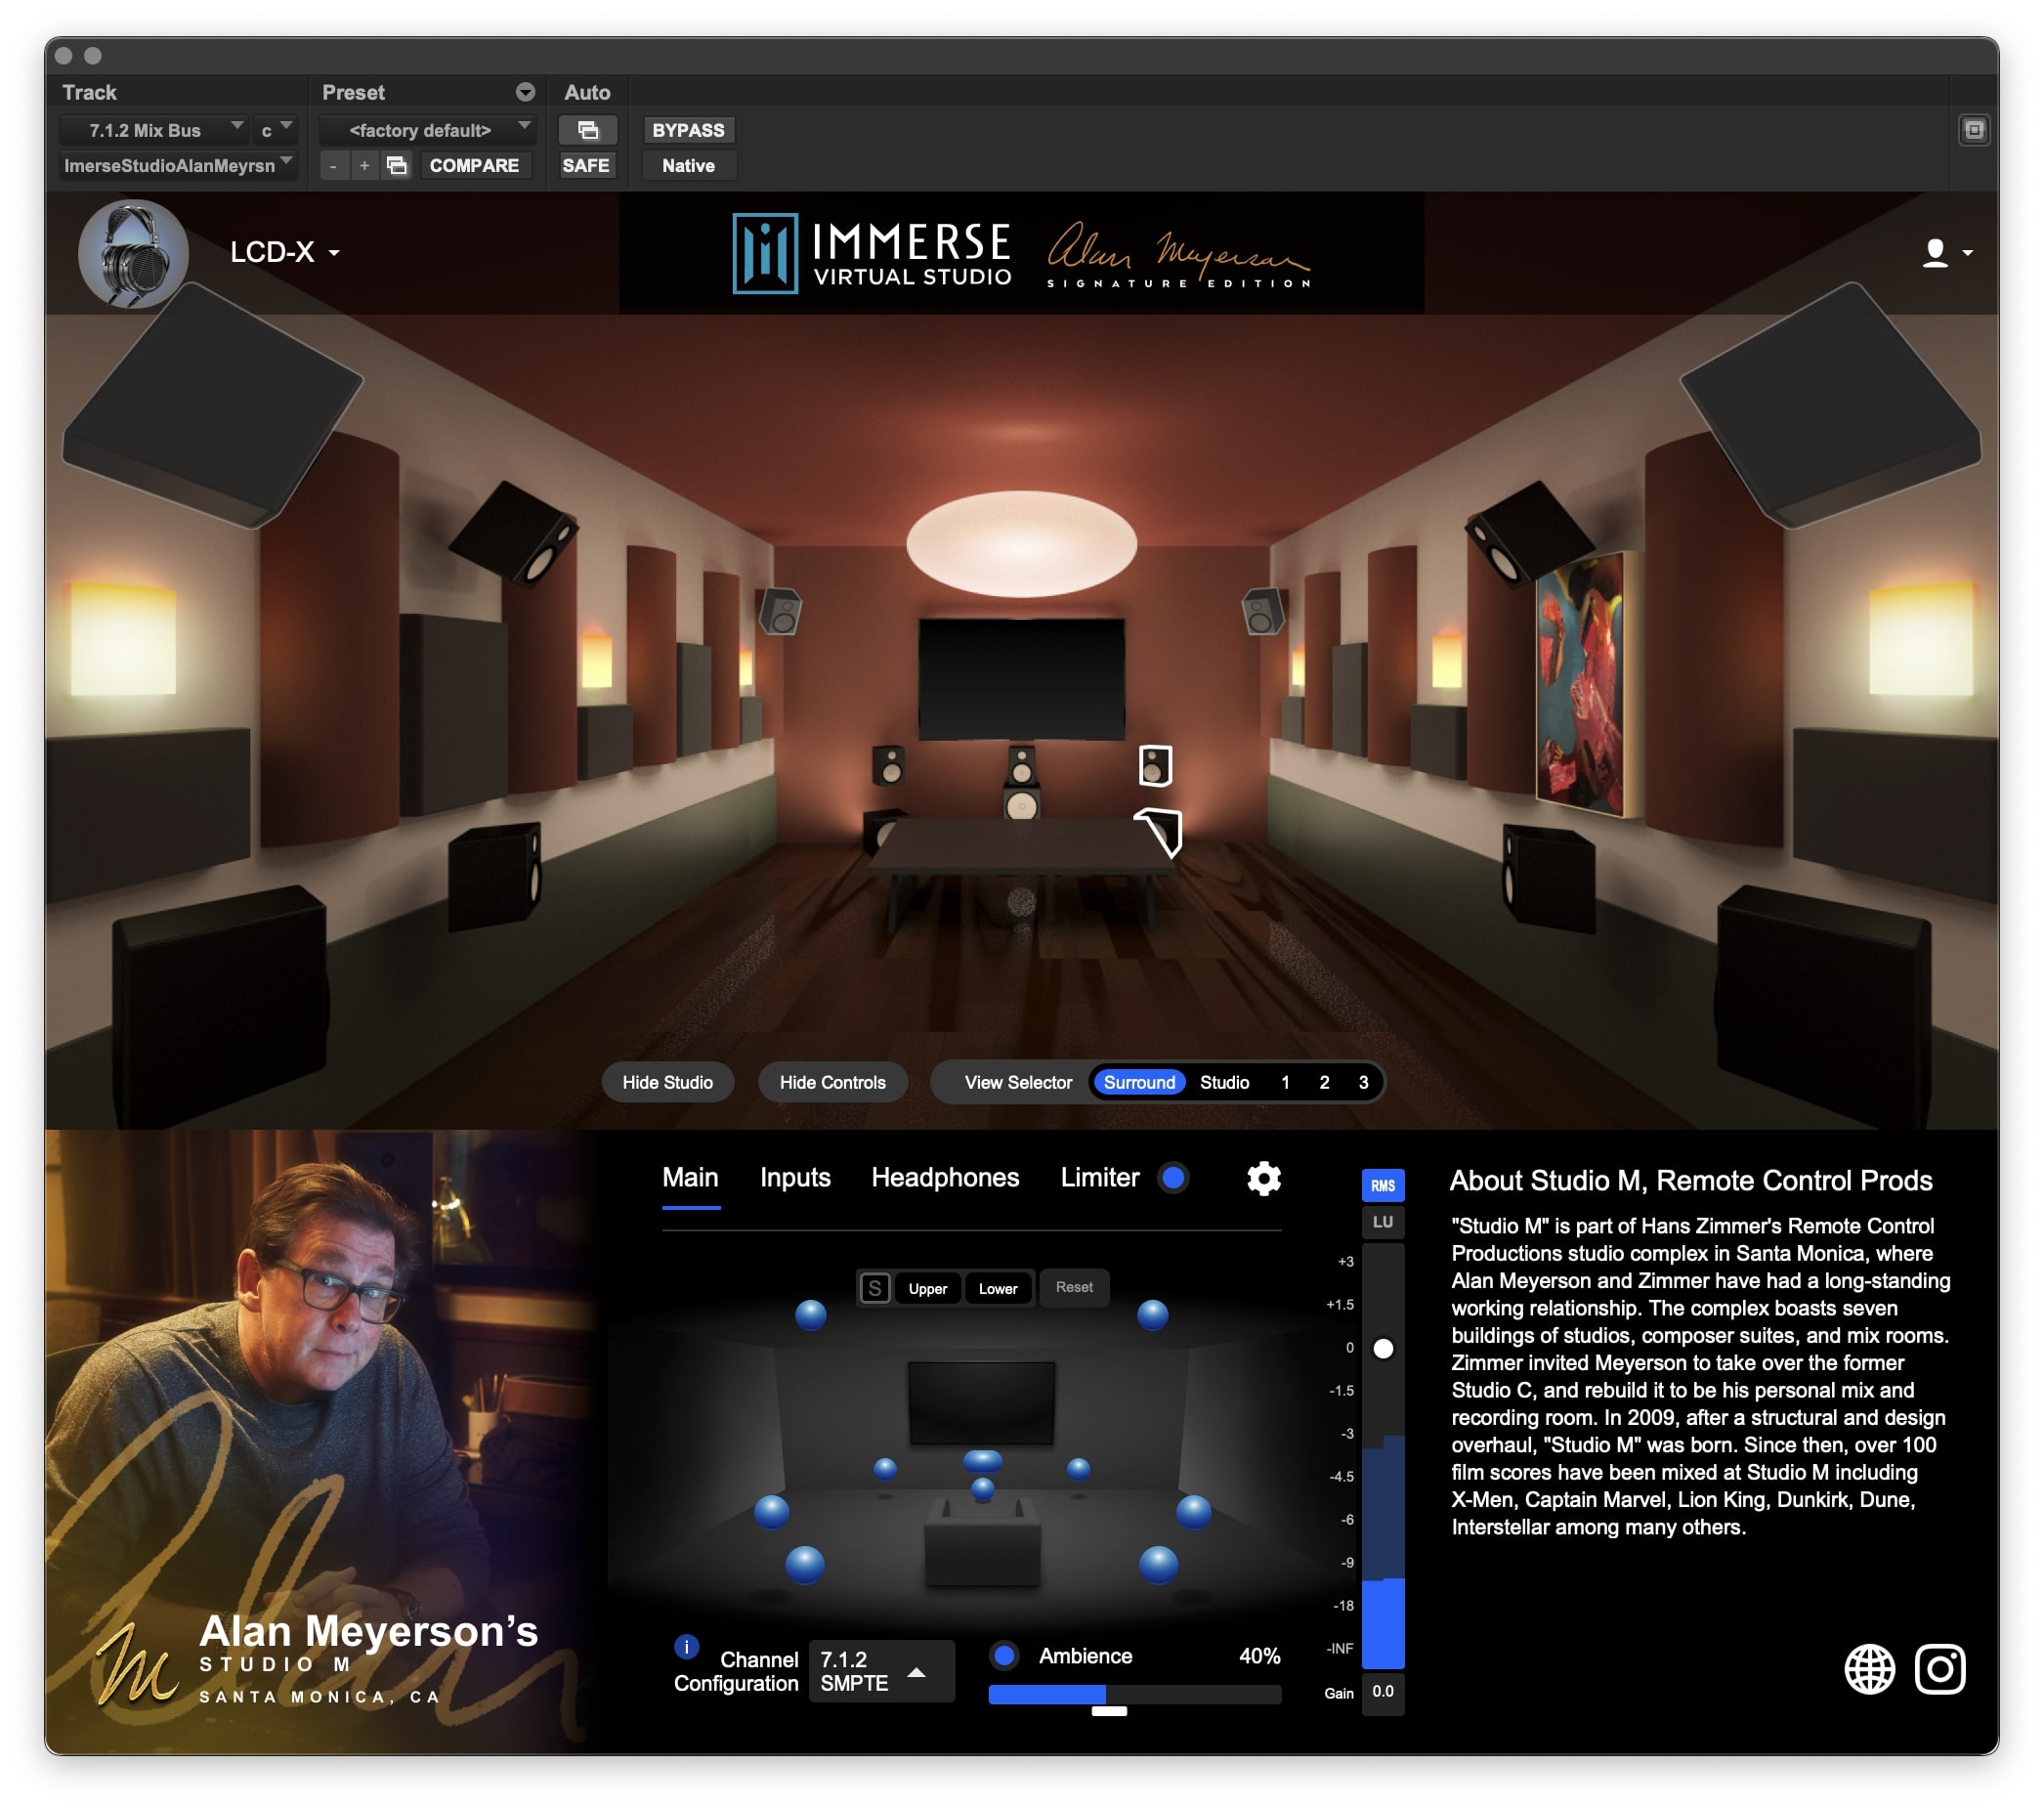 Embody Immerse Virtual Studio | Alan Meyerson